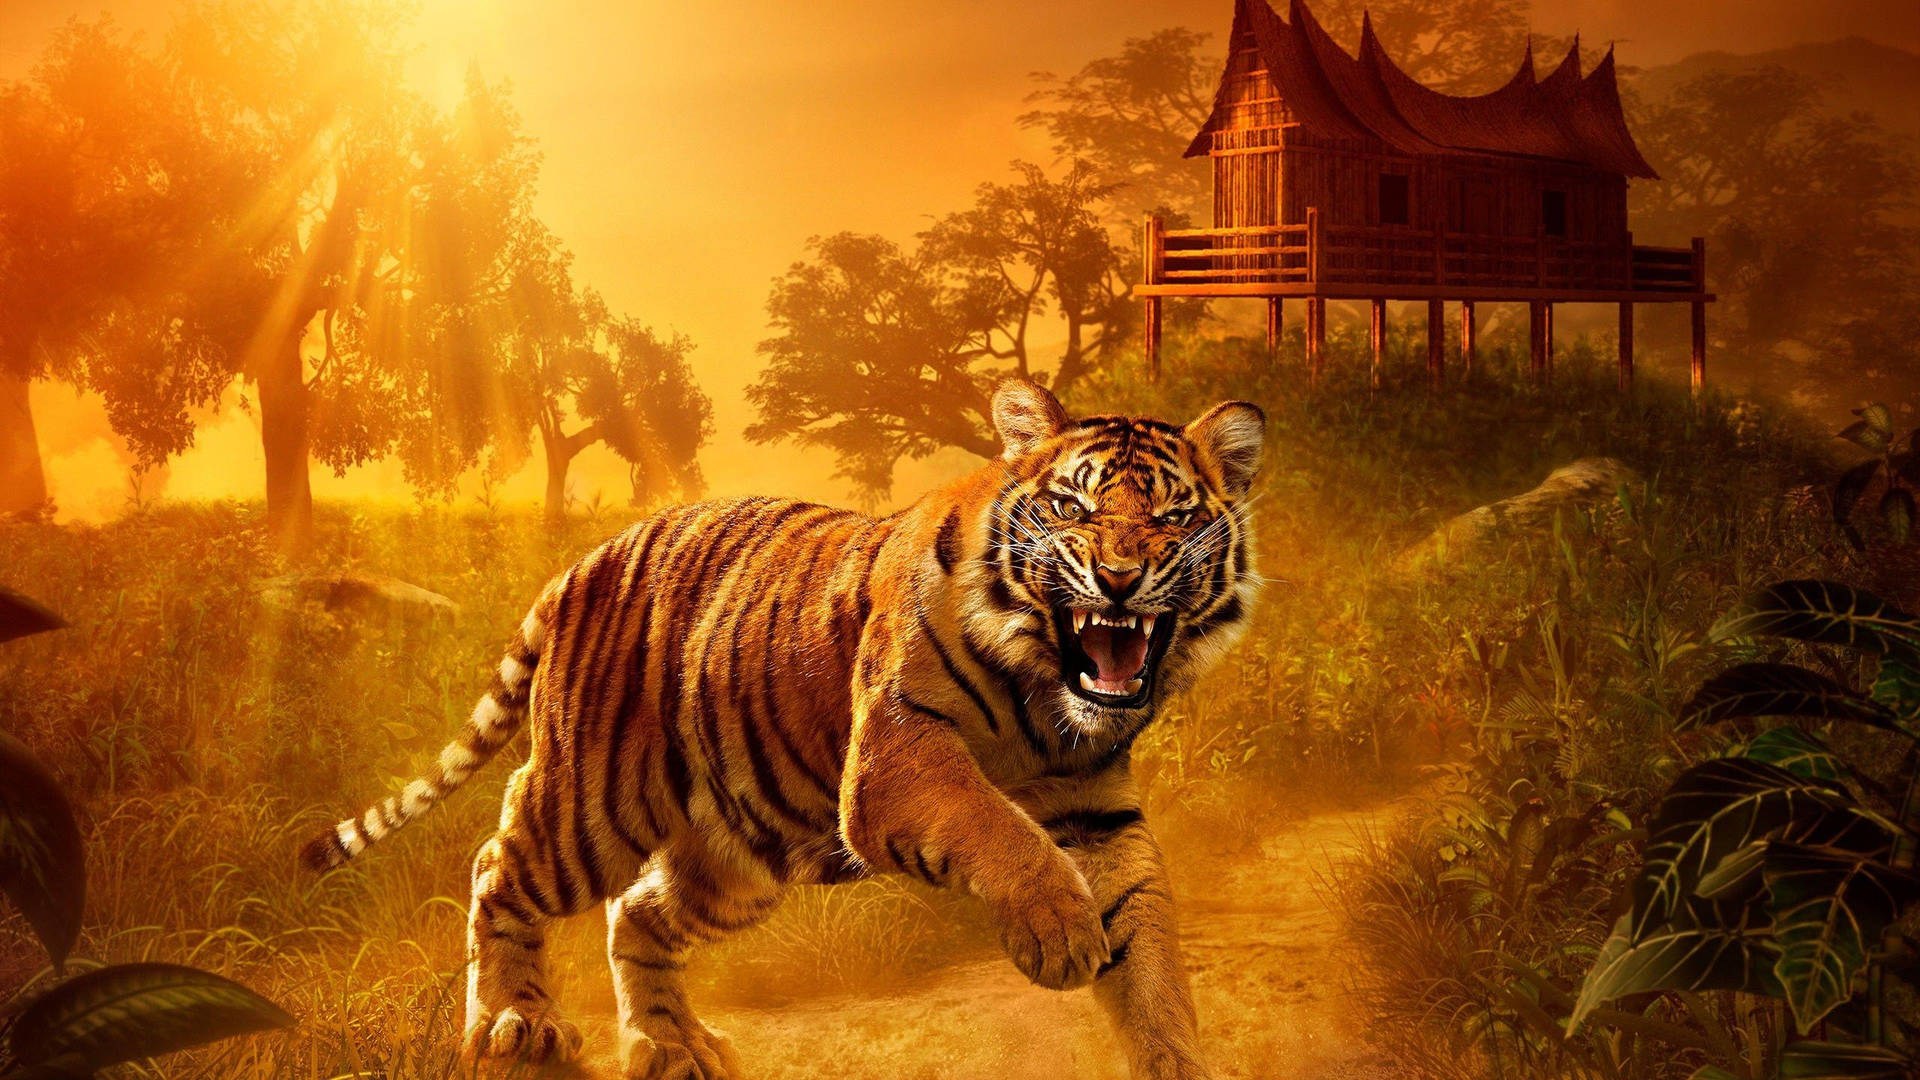 Vred Tiger 2560 X 1440 Wallpaper